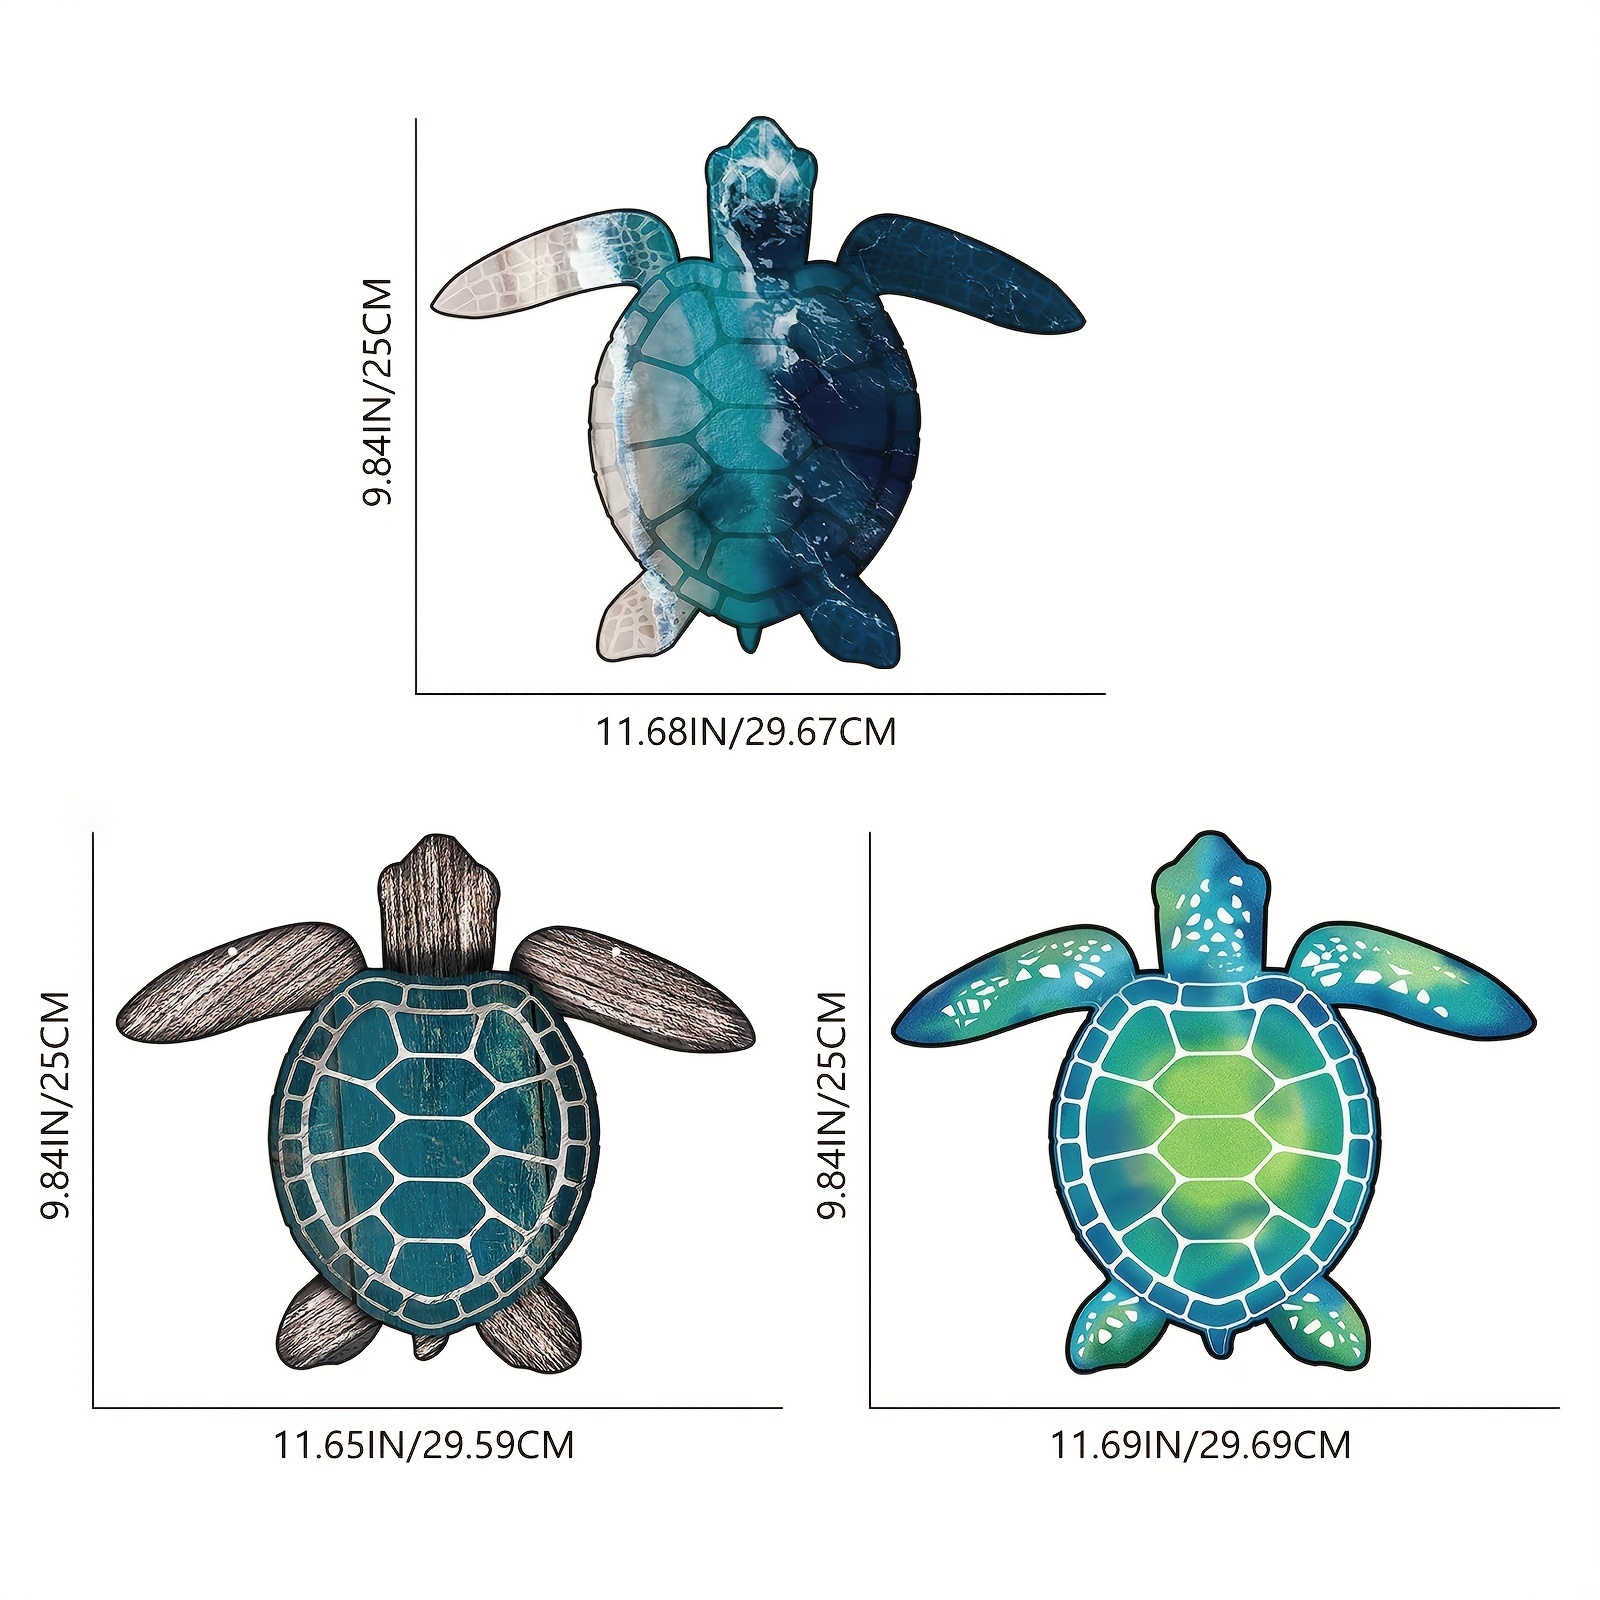 Contraventana de madera - Diseño de tortuga marina